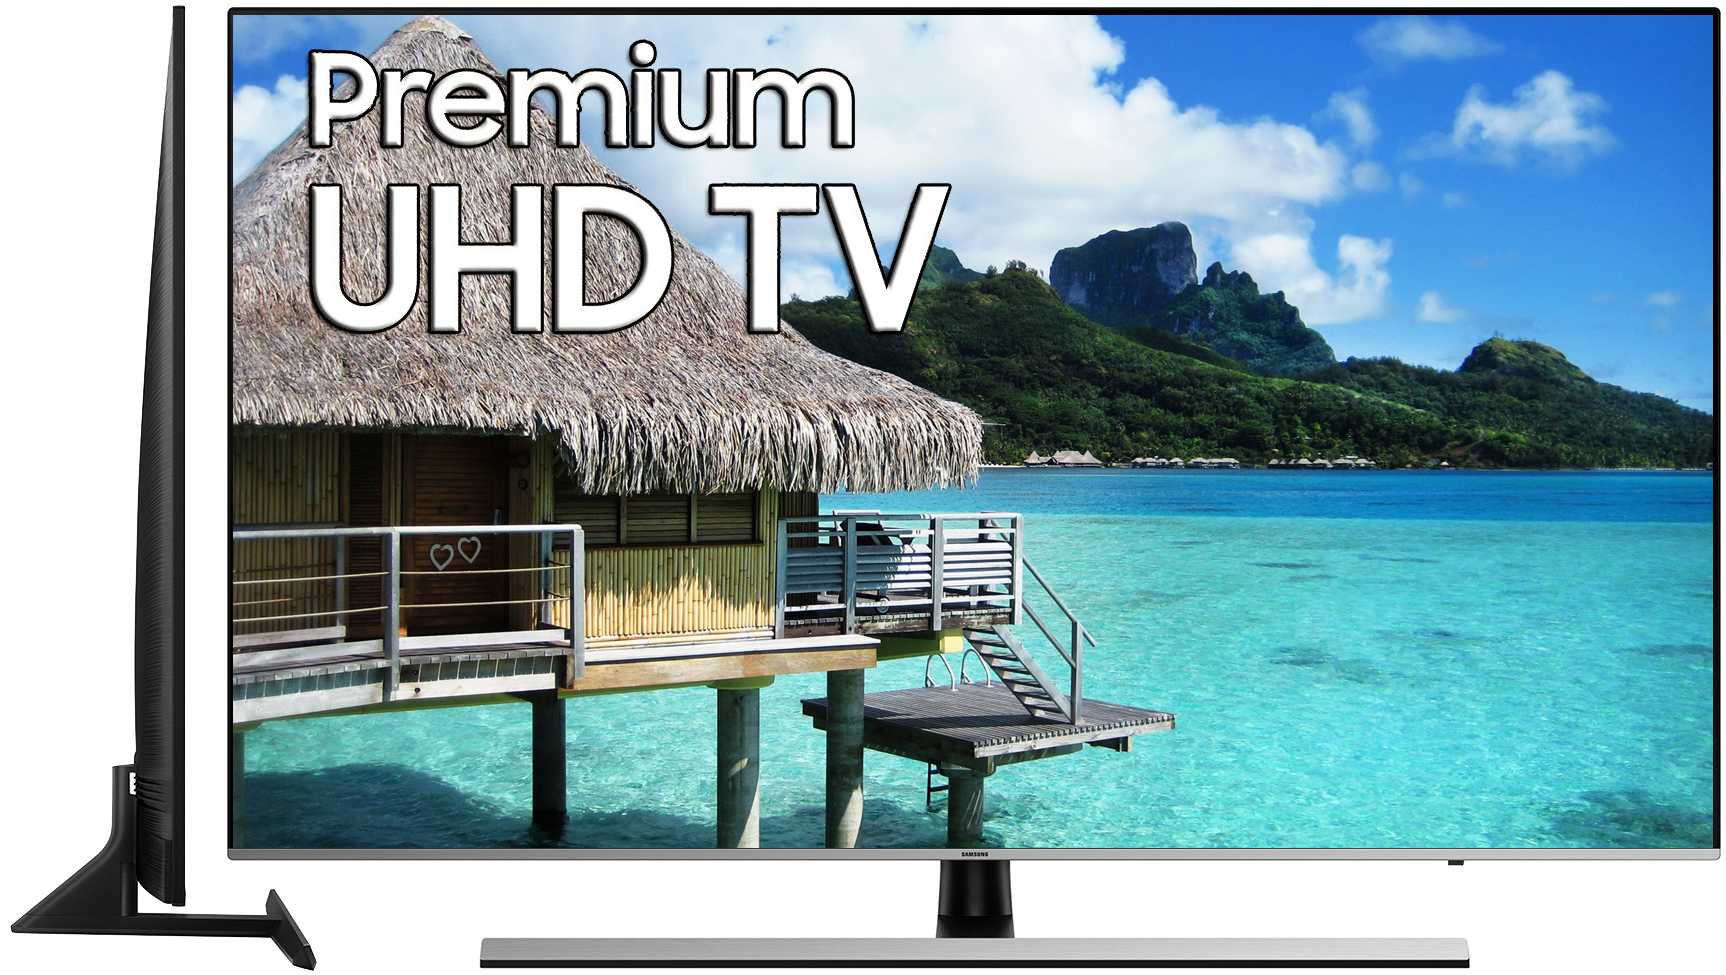 Samsung ue55tu7097u бюджетный 4к hdr телевизор 2020